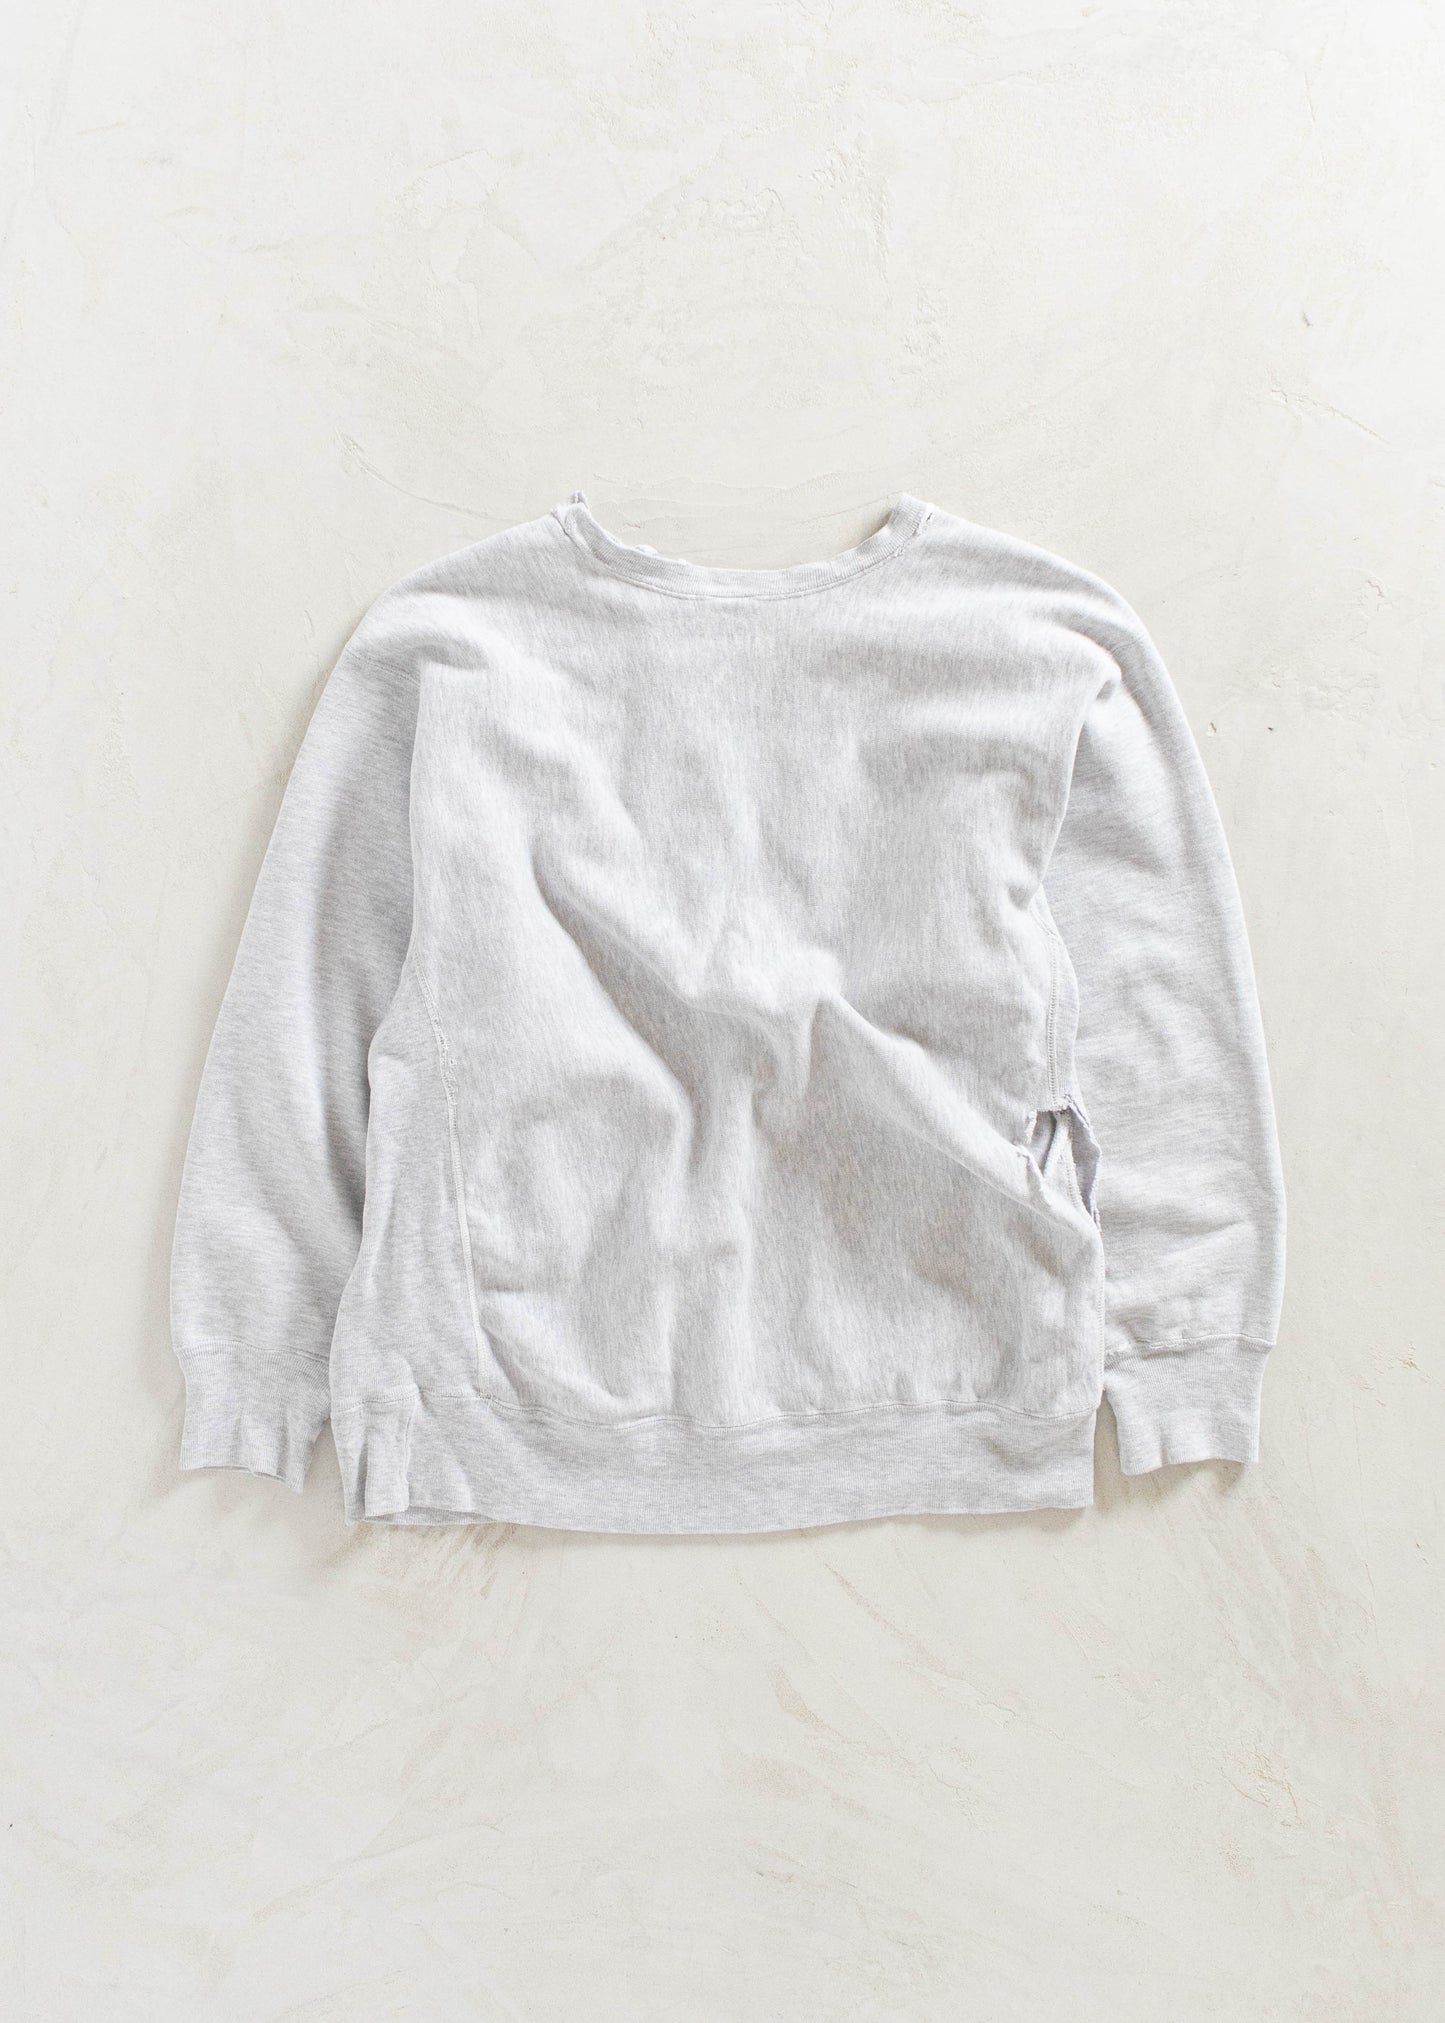 Vintage 1980s Champion Reverse Weave Warmup JJS Sweatshirt Size L/XL